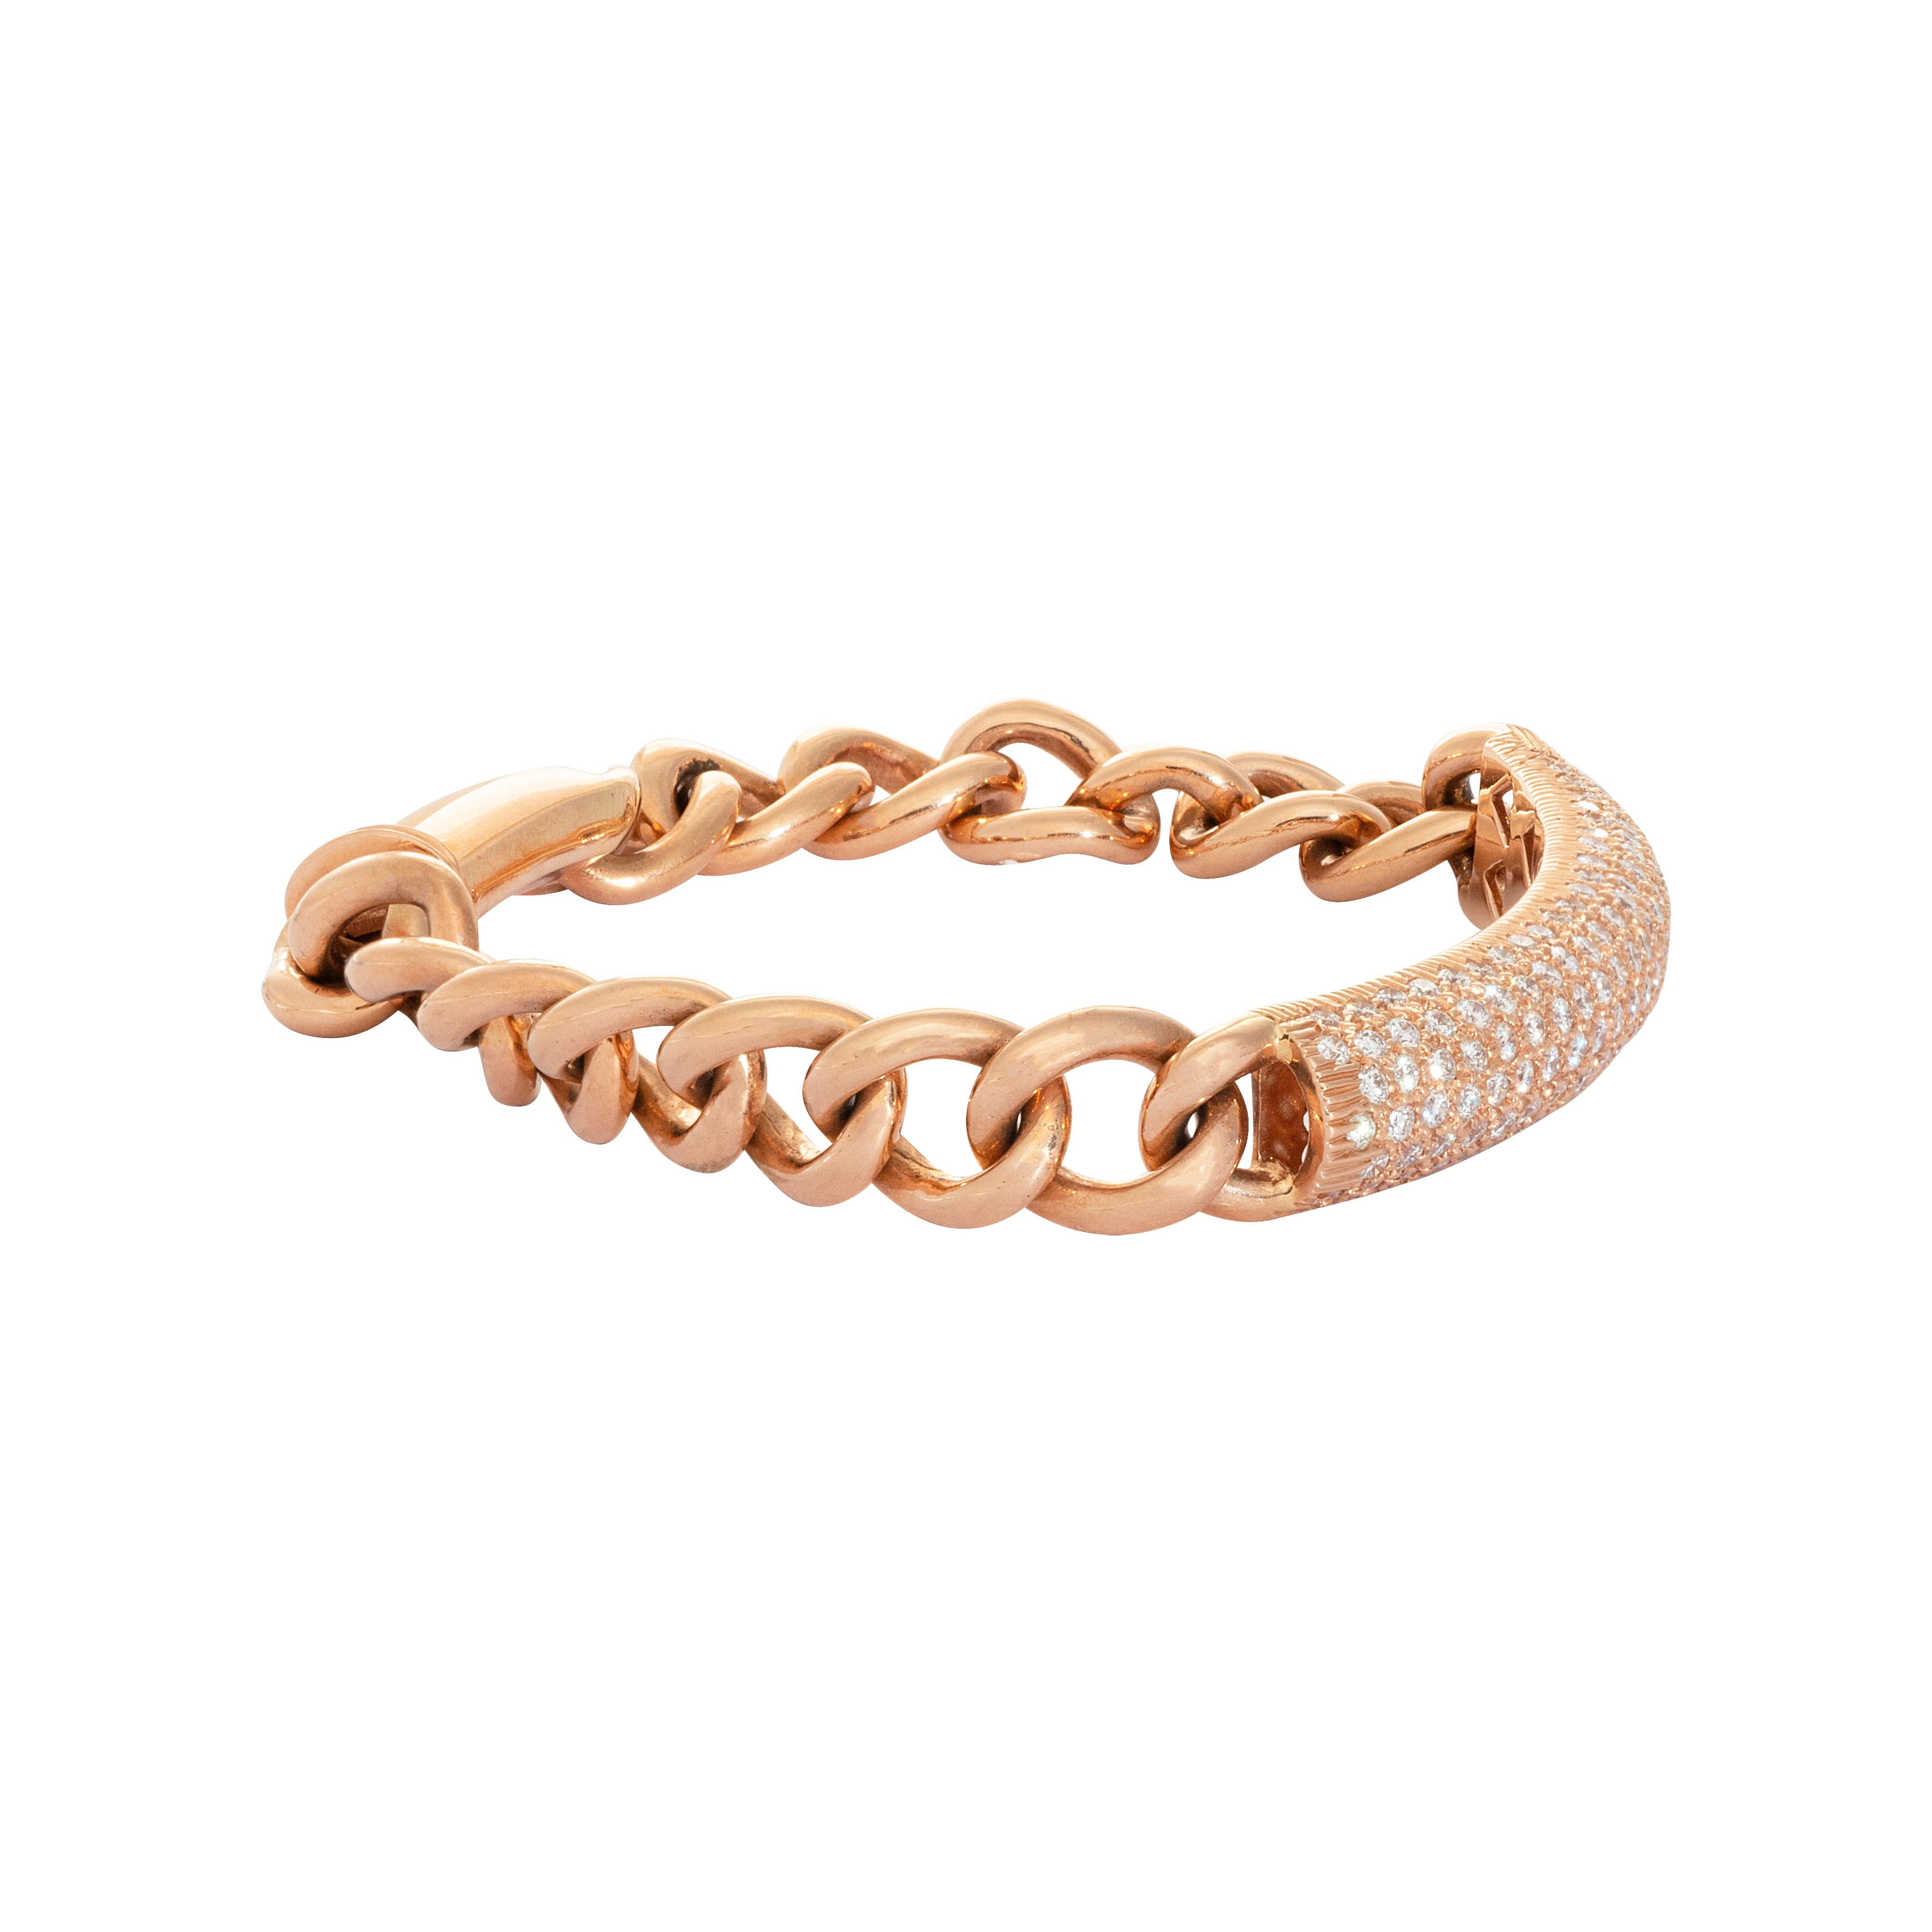 18 Karat Rose Gold Diamond Link Bracelet

This gorgeous uni-sex bracelet set in 18 Karat rose gold and studded with diamonds (VVS-VS Purity) is ideal for evening wear 

Diamonds - 3.72cts
18 Karat Gold - 57.956gms 